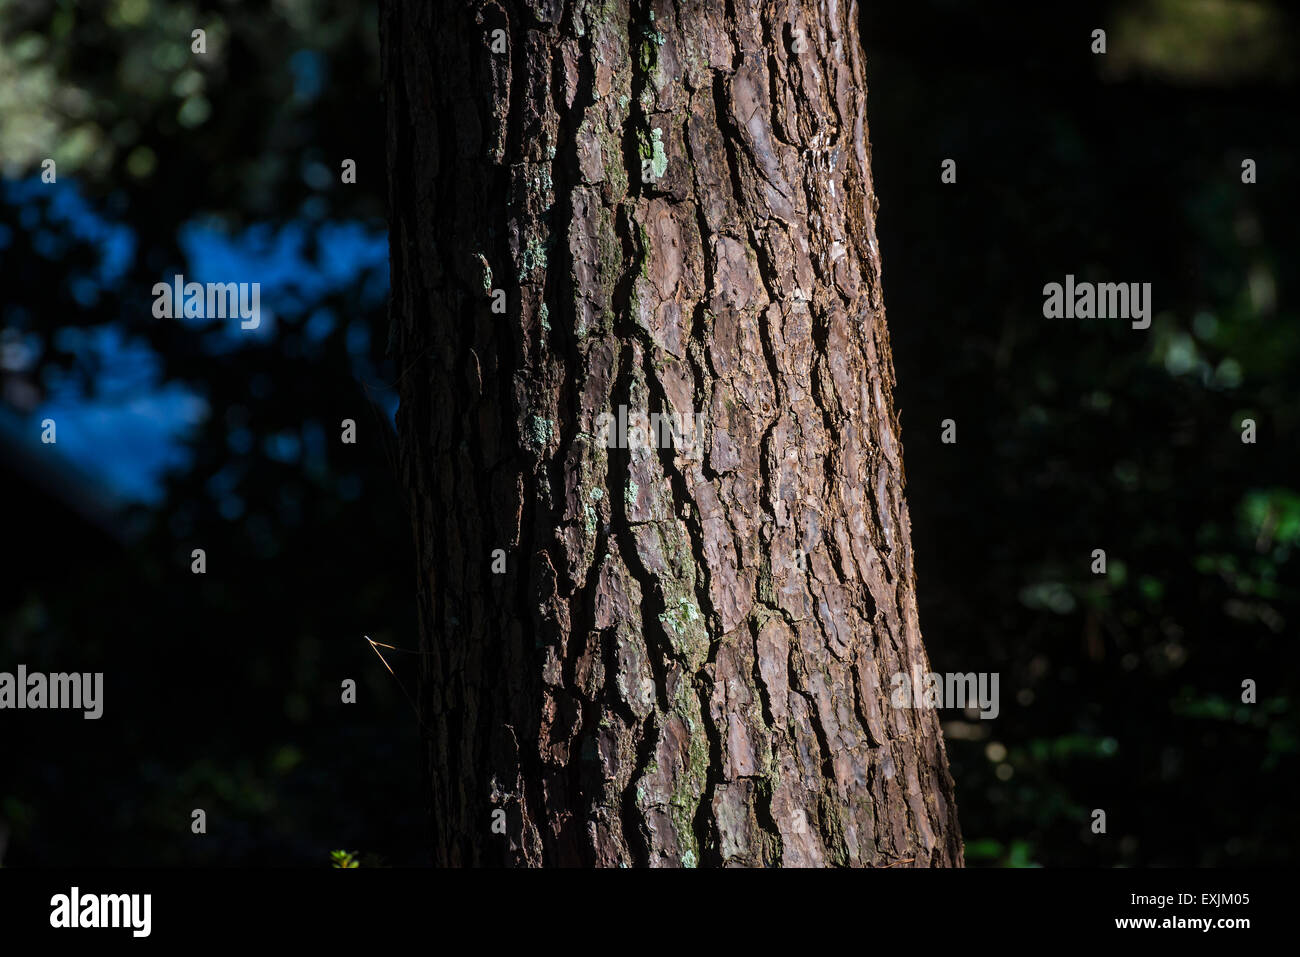 Loblolly pine tree trunk at Kanapaha Botanical Gardens in Gainesville, Florida. Stock Photo